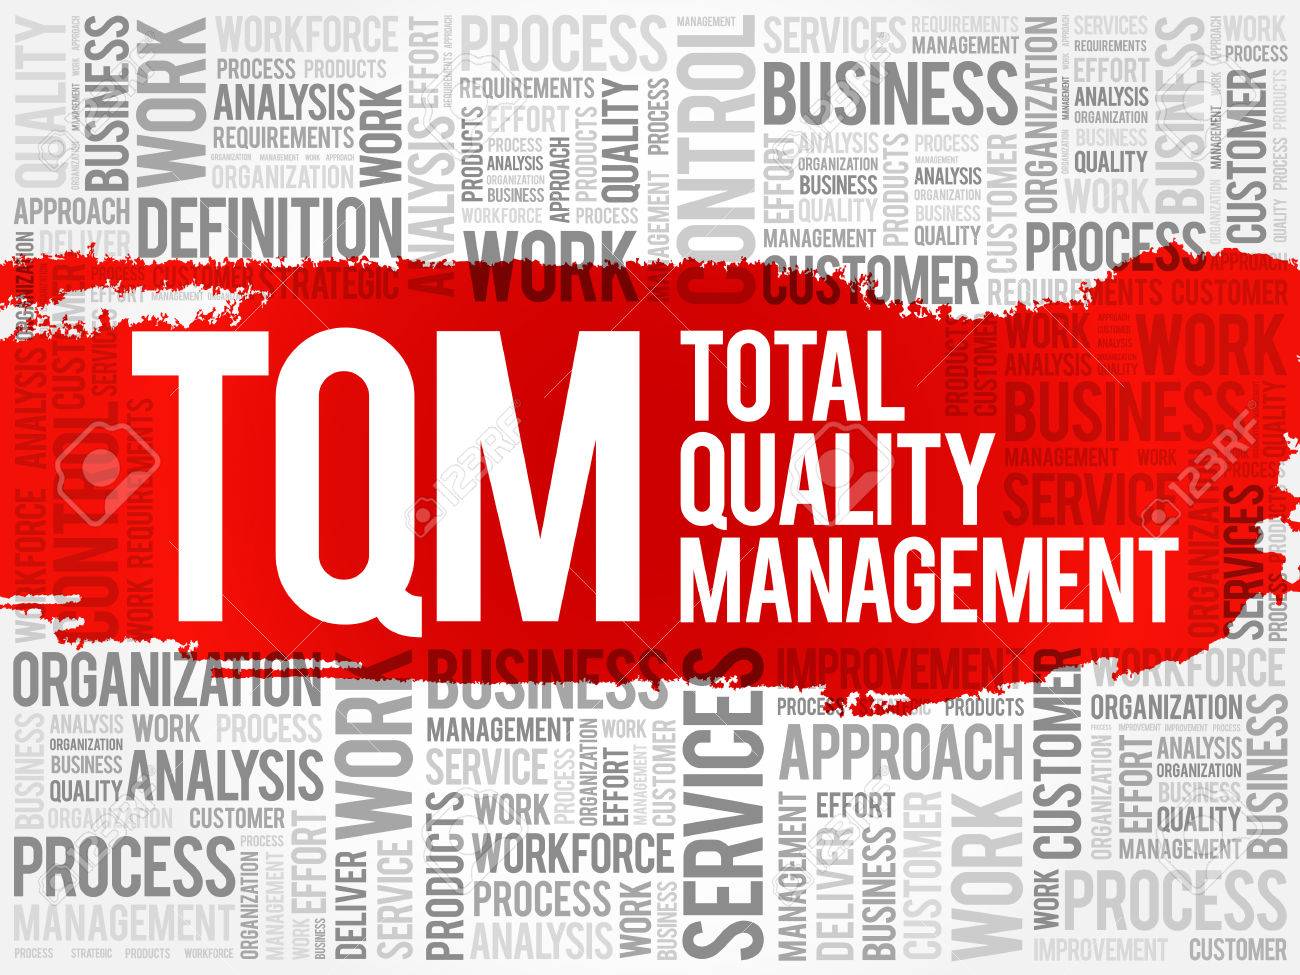 Total Quality Management Masterclass (TQM)